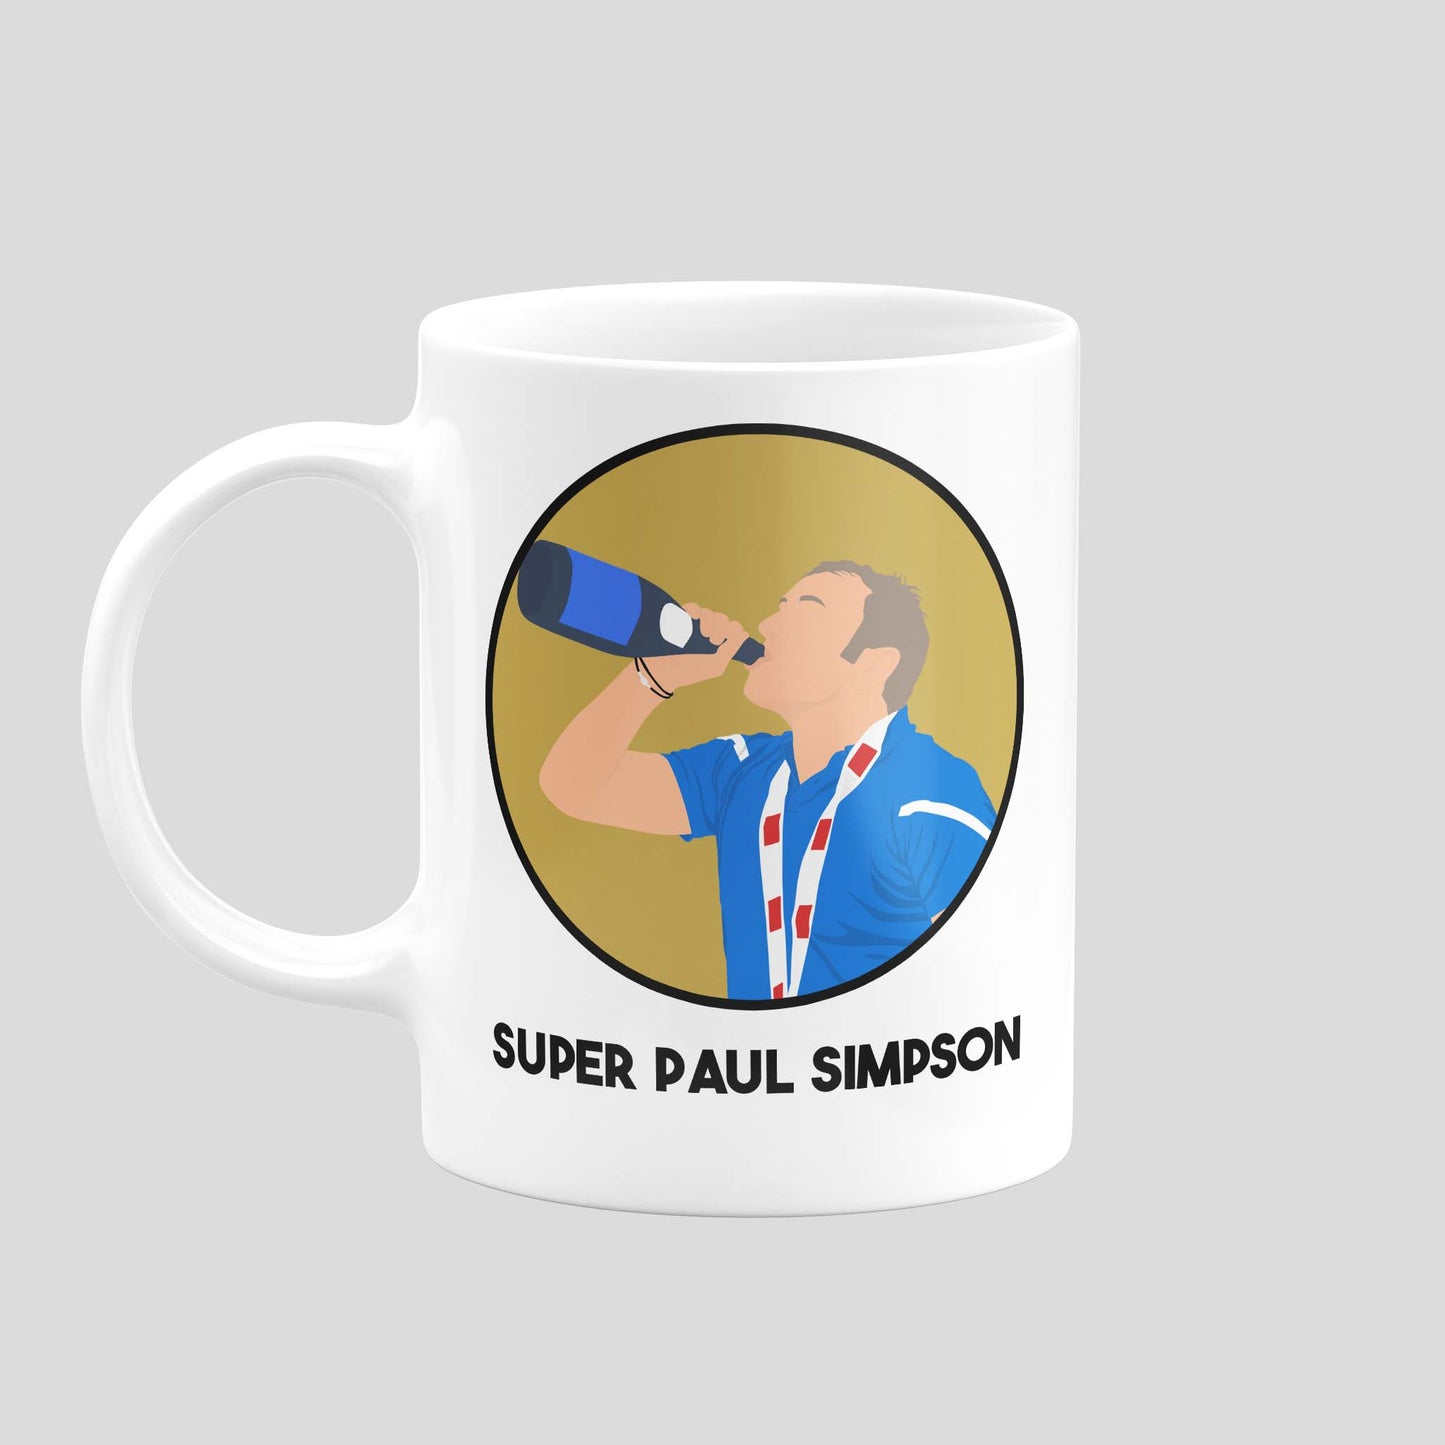 Paul Simpson Final Mug